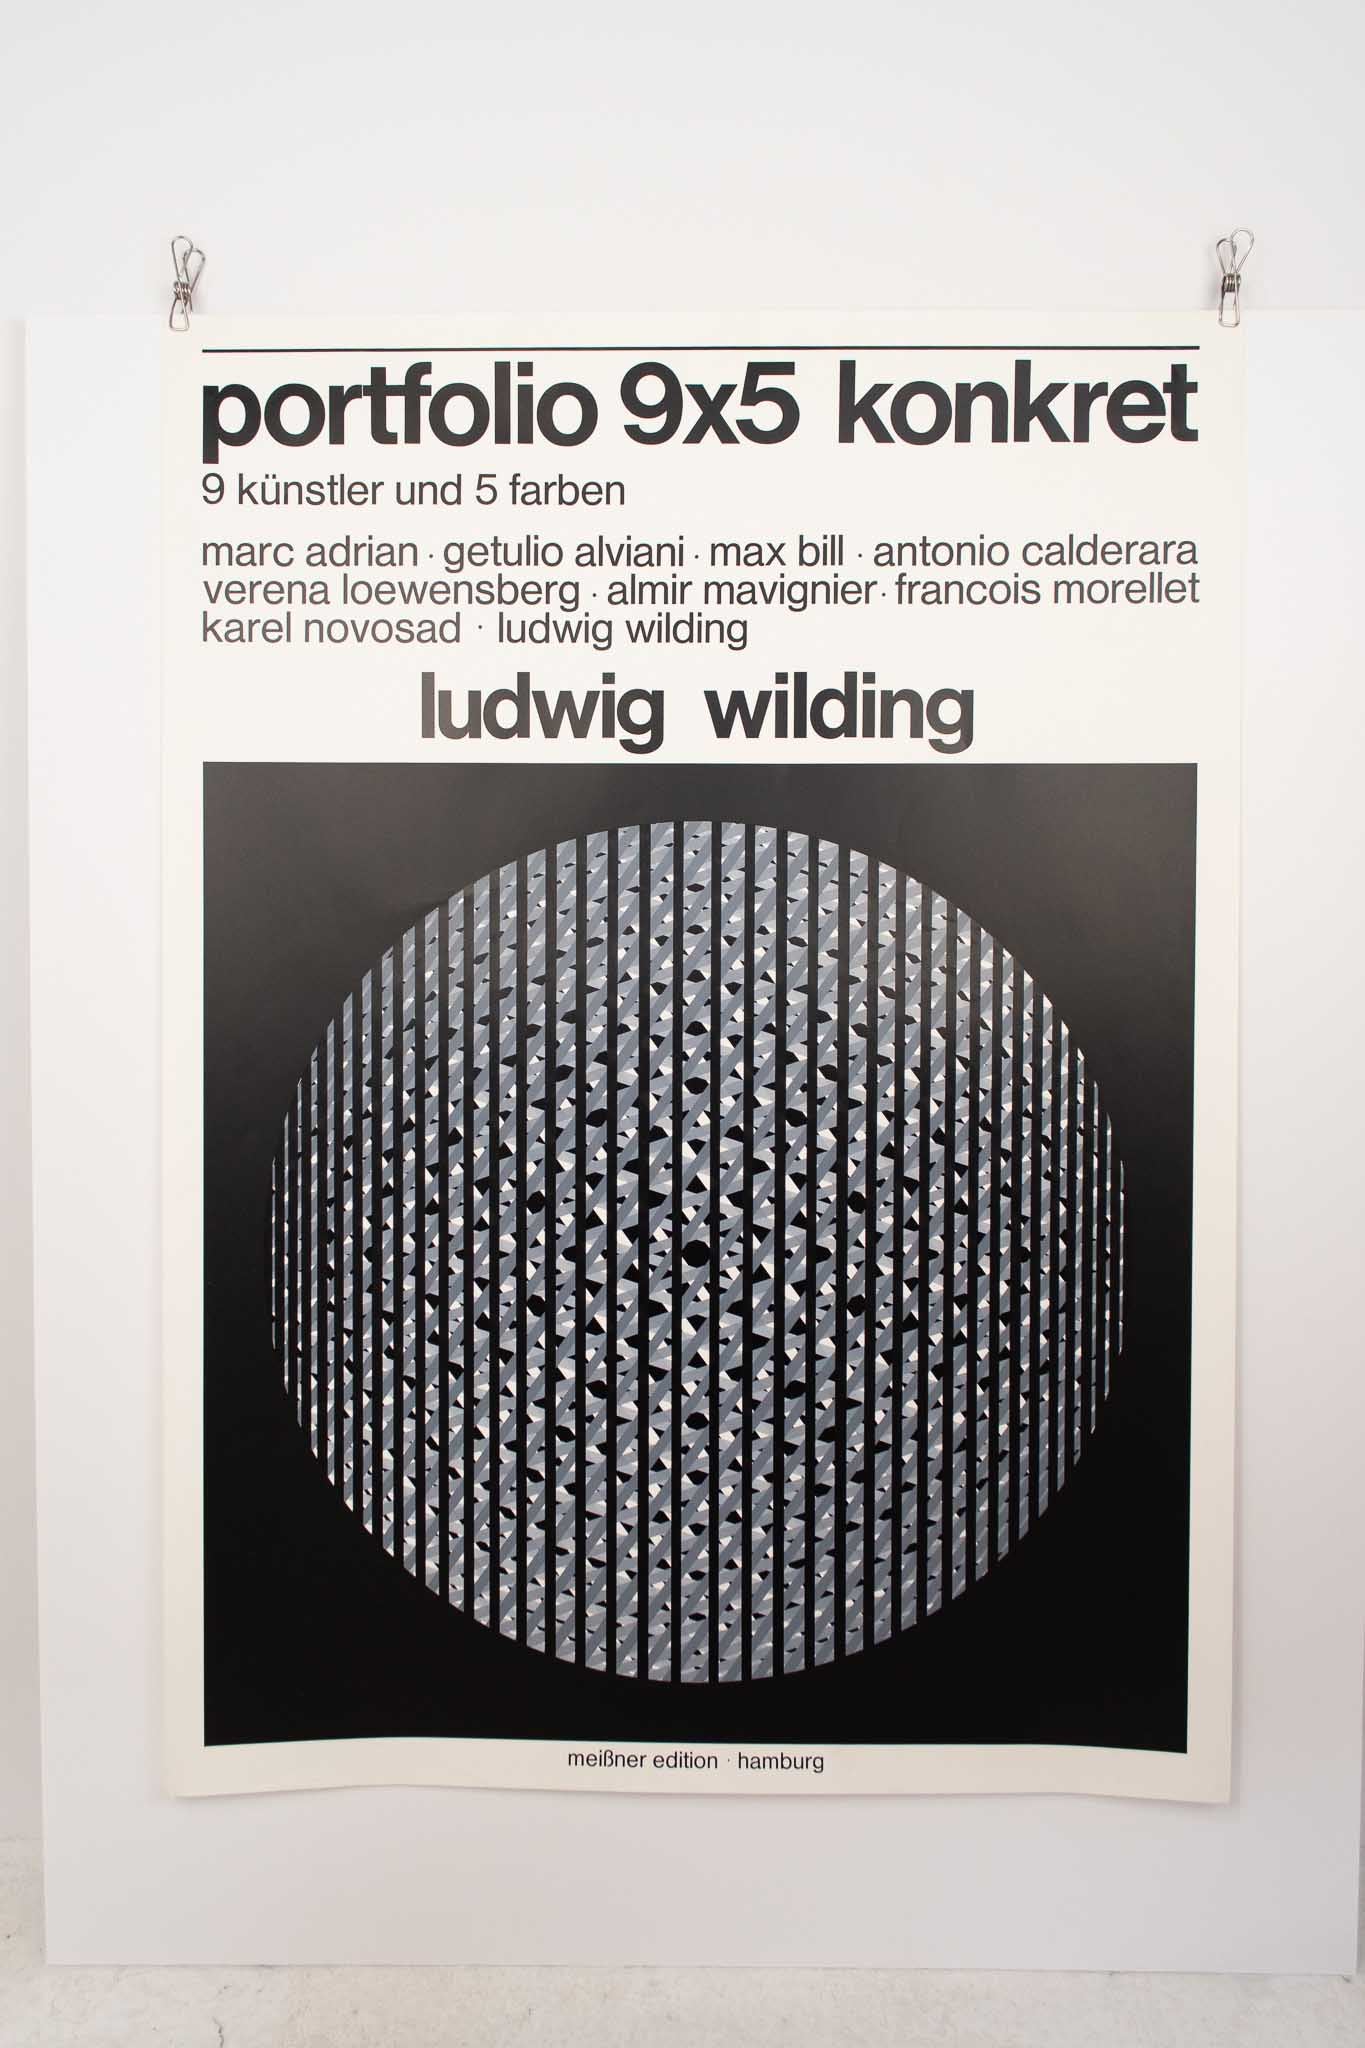 Ludwig Wilding "portfolio 9x5 konkret"  Print